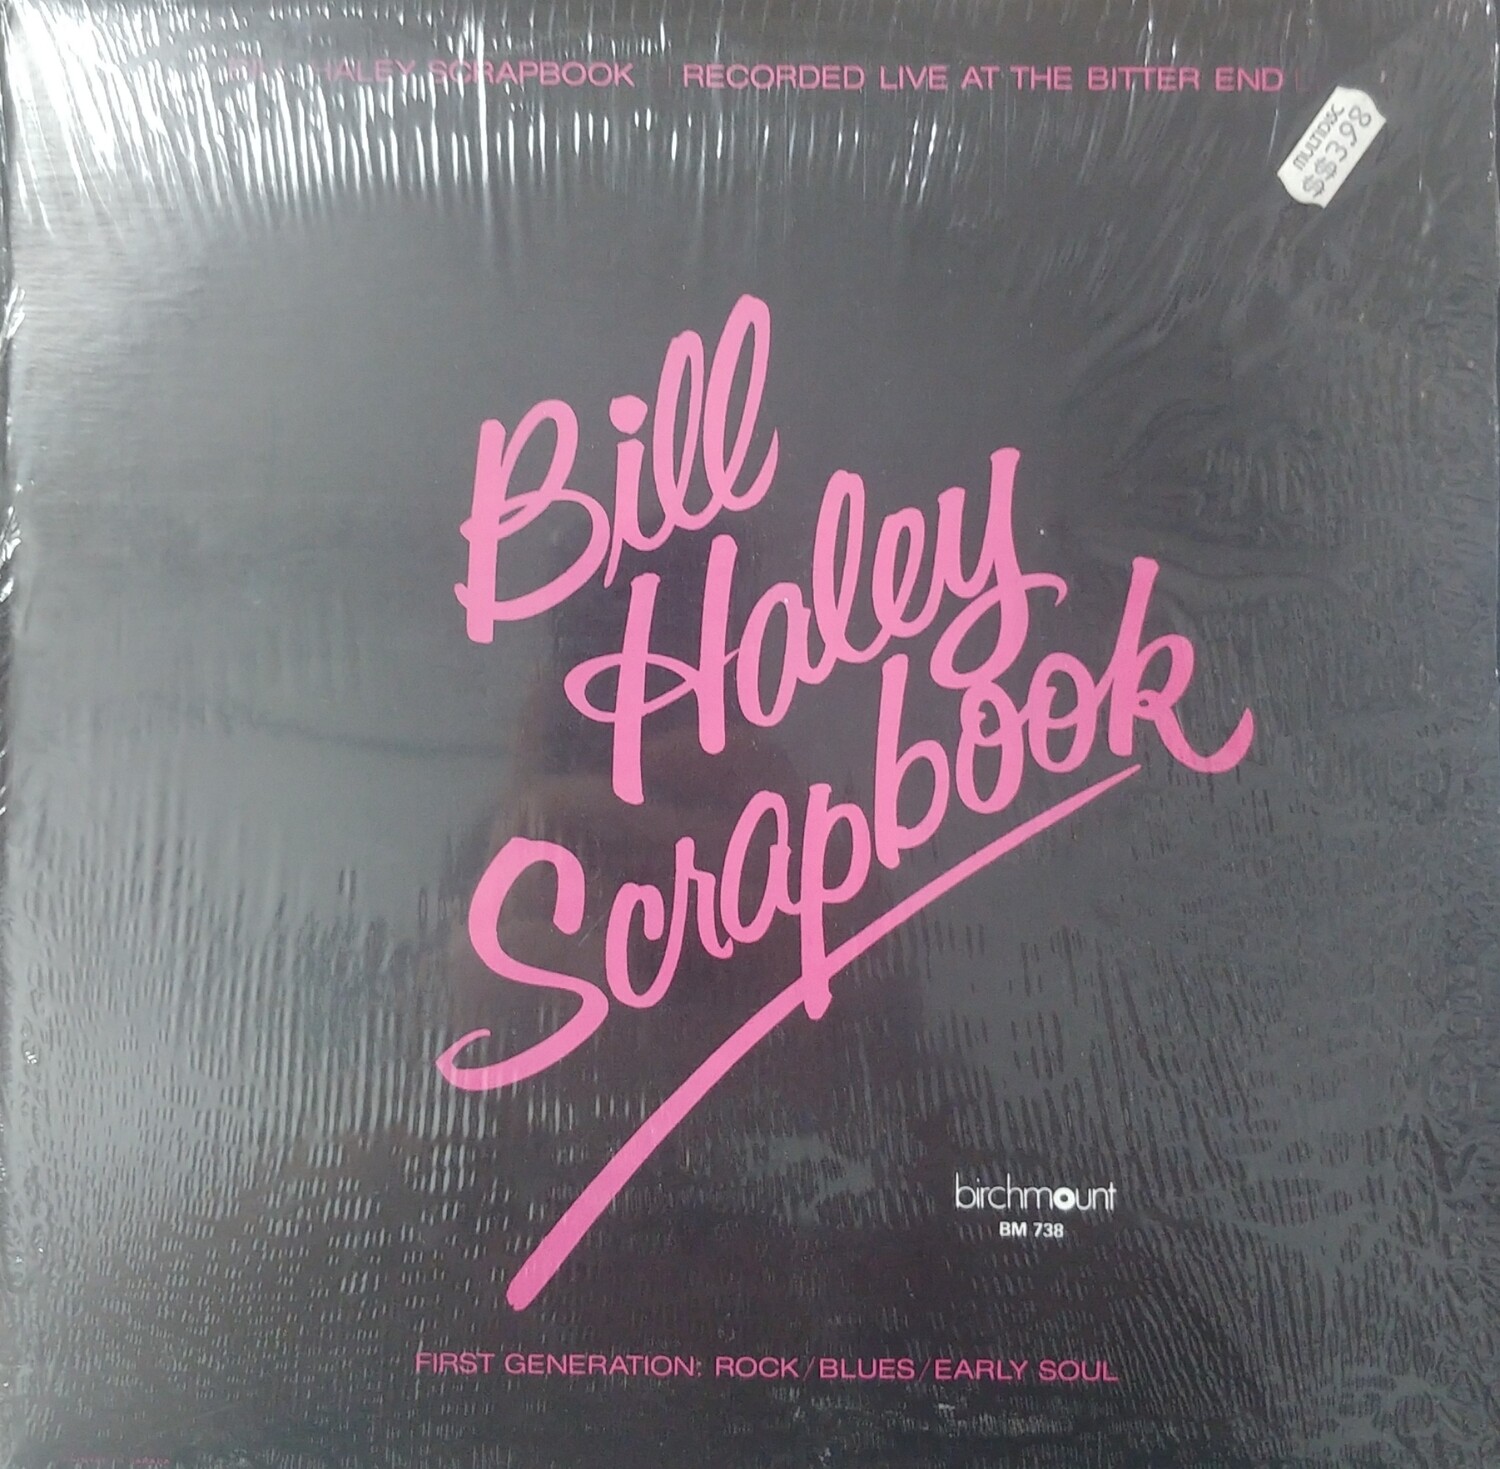 Bill Haley - Scrapbook